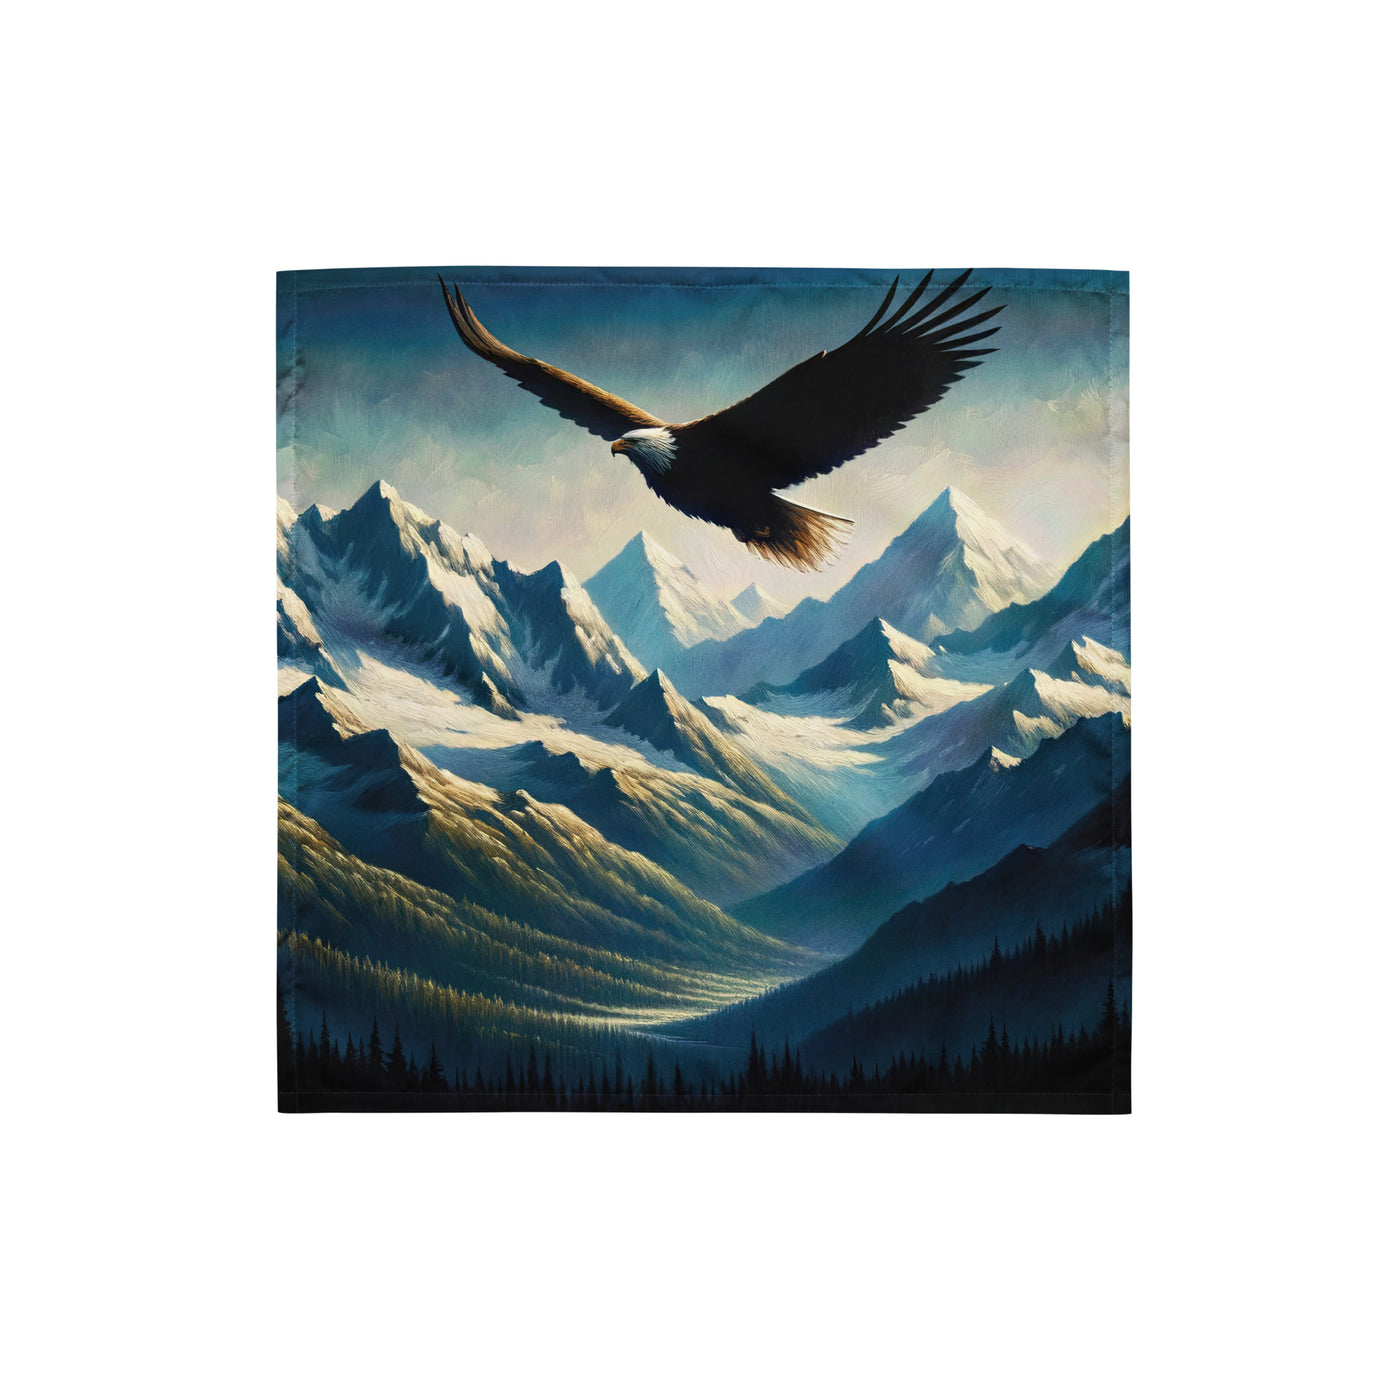 Ölgemälde eines Adlers vor schneebedeckten Bergsilhouetten - Bandana (All-Over Print) berge xxx yyy zzz S